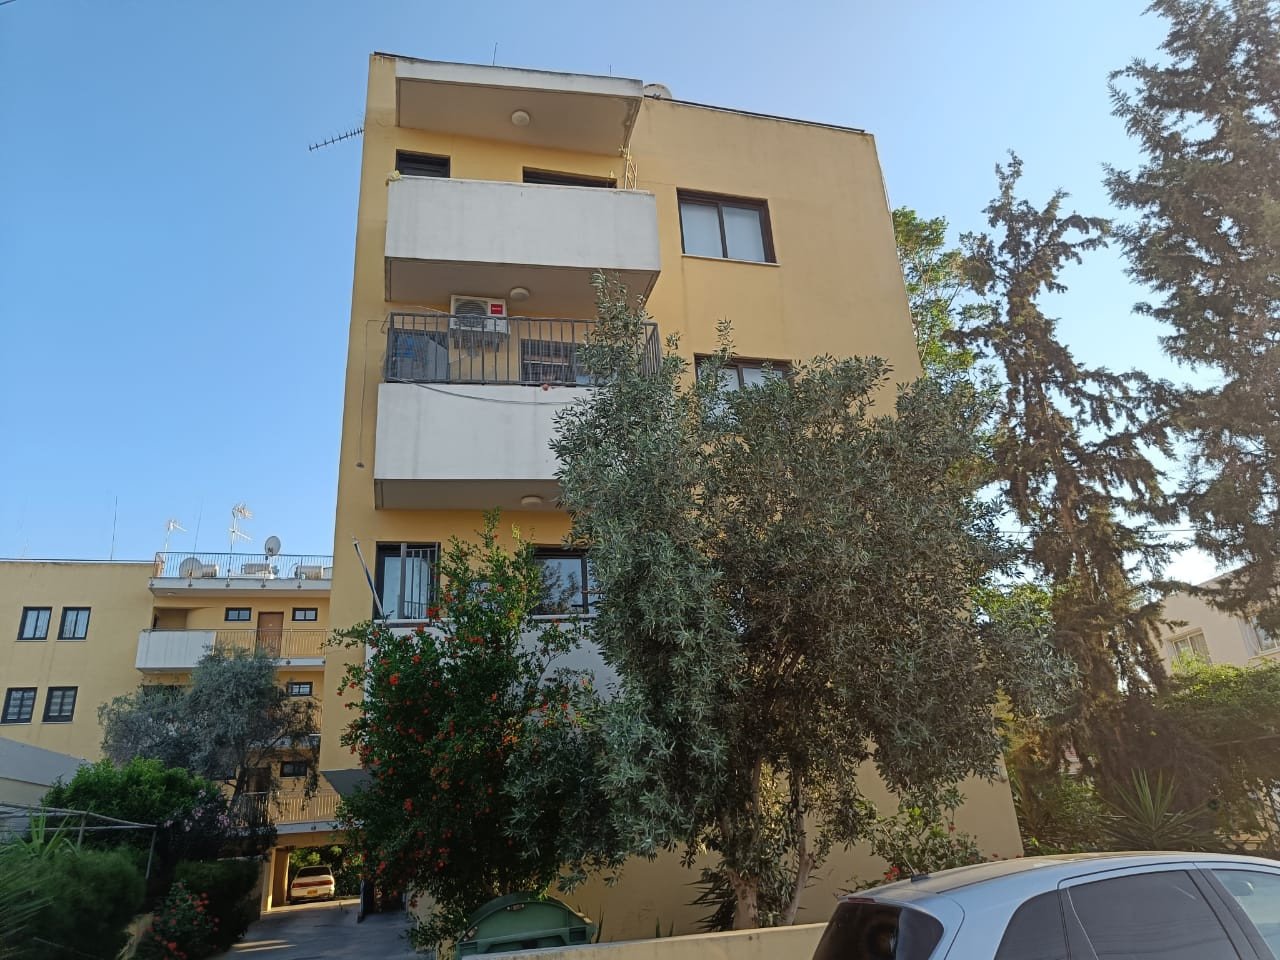 For Sale: Apartment (Flat) in Kaimakli, Nicosia for Rent | Key Realtor Cyprus